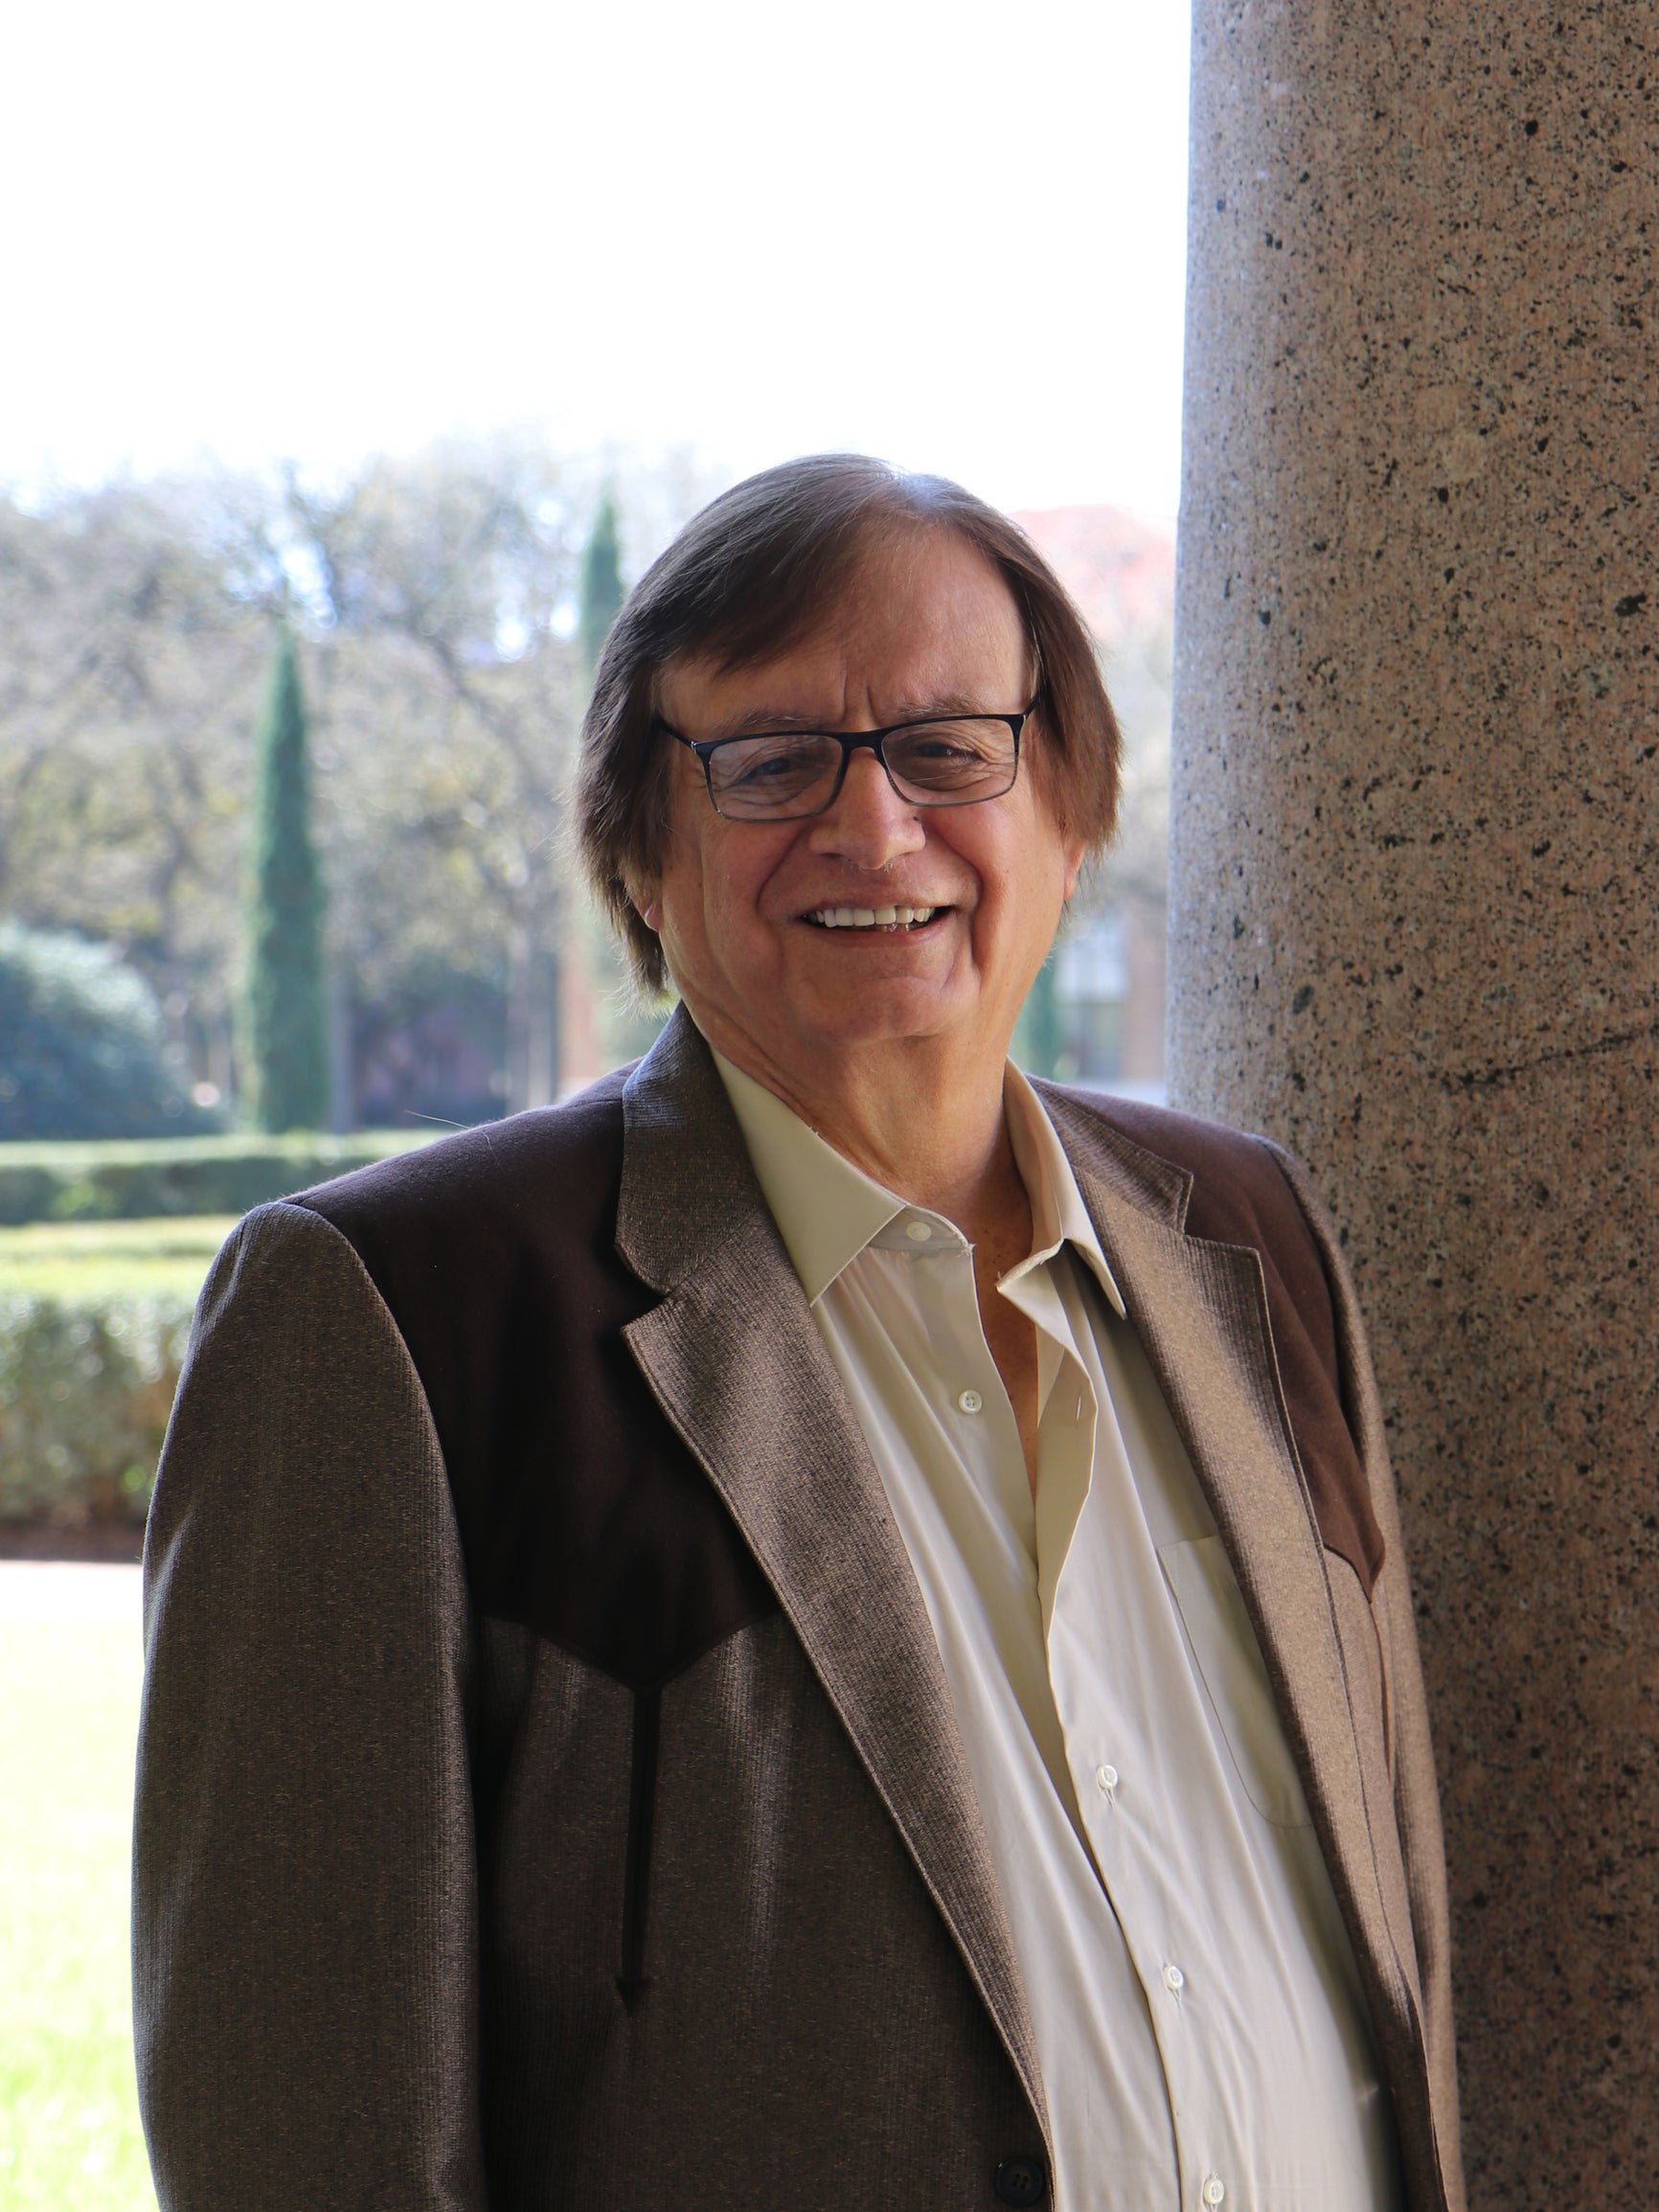 Professor Richard A. Tapia